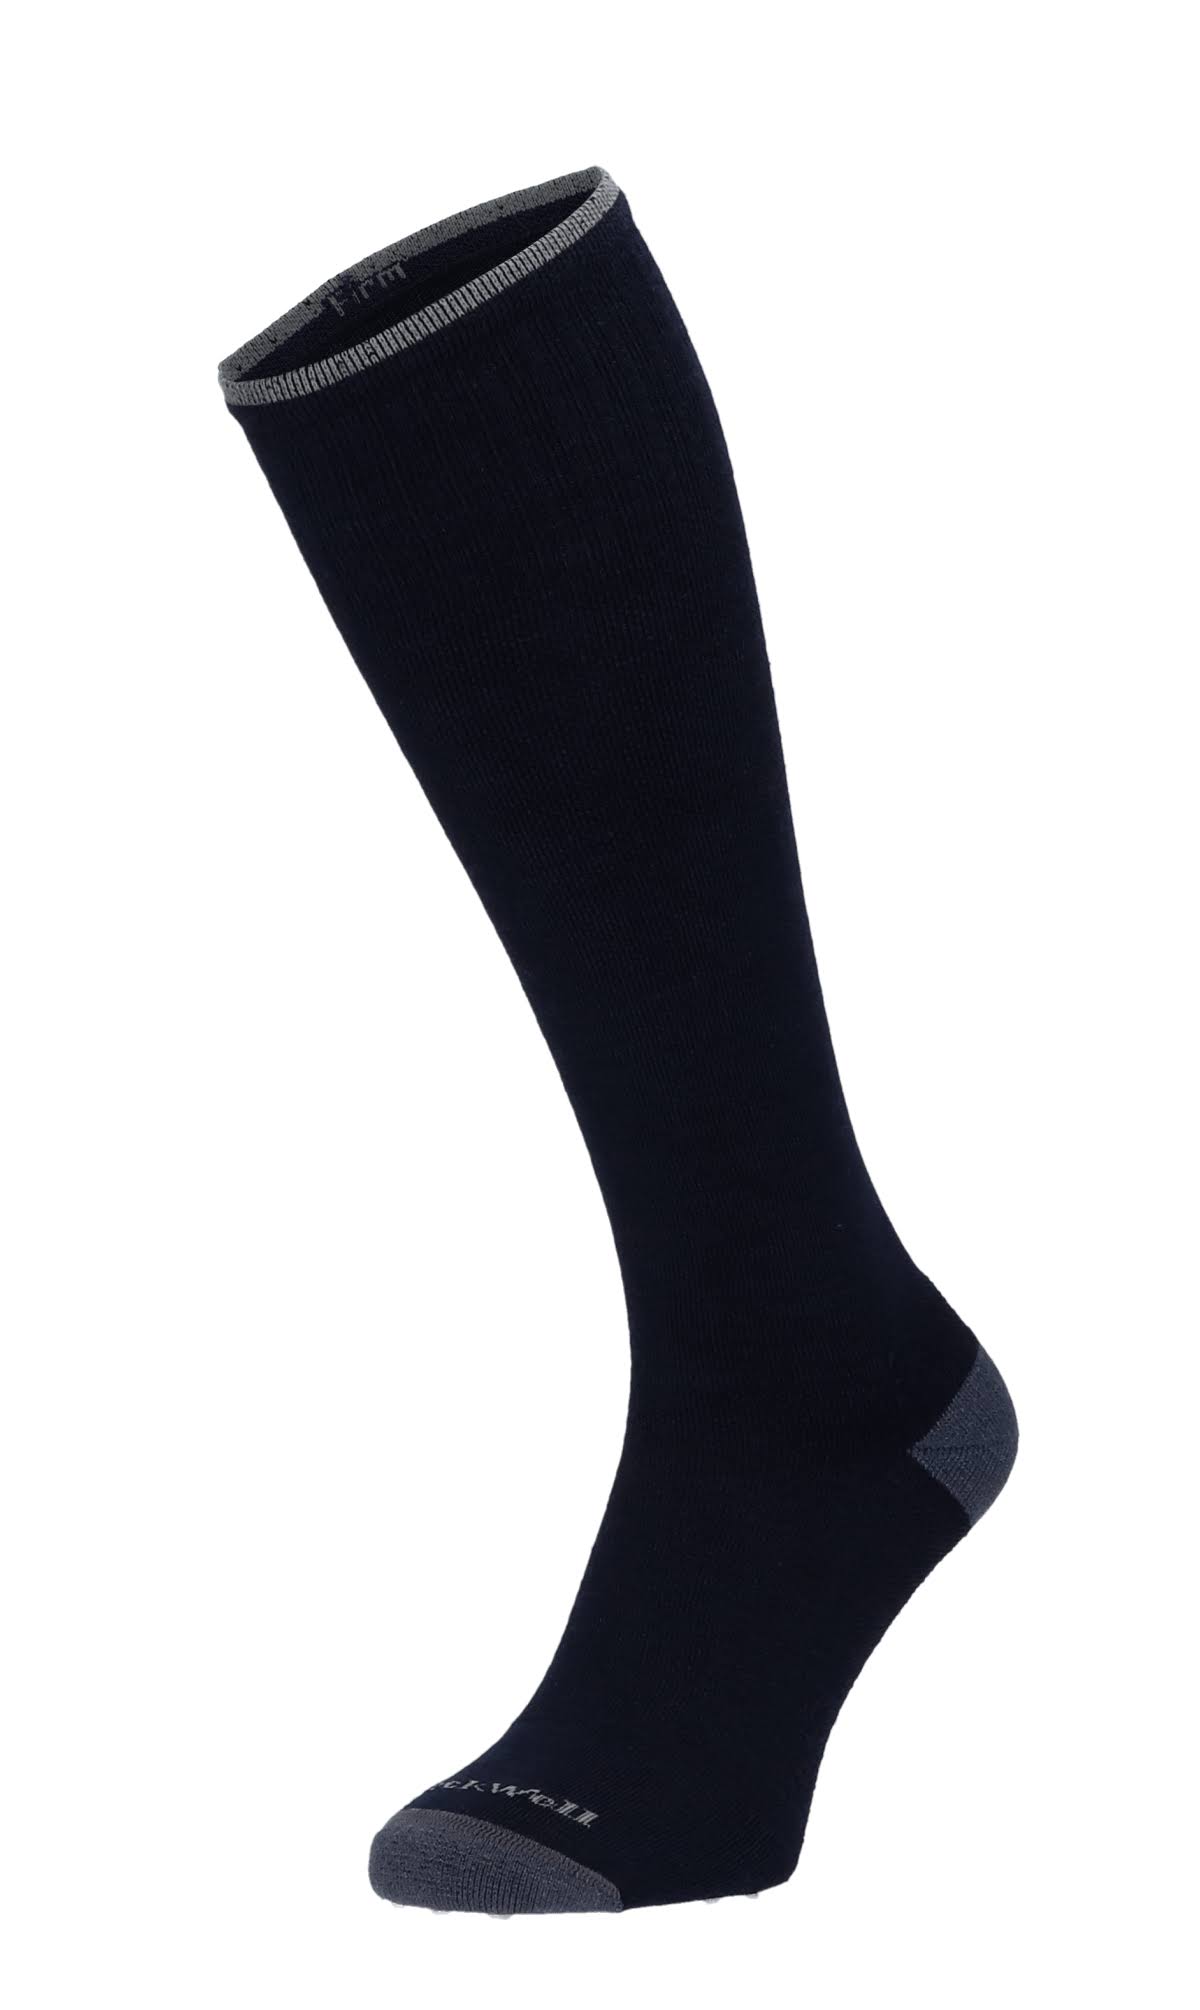 Sockwell Men's Elevation Firm Graduated Compression Sock, Navy - M/L